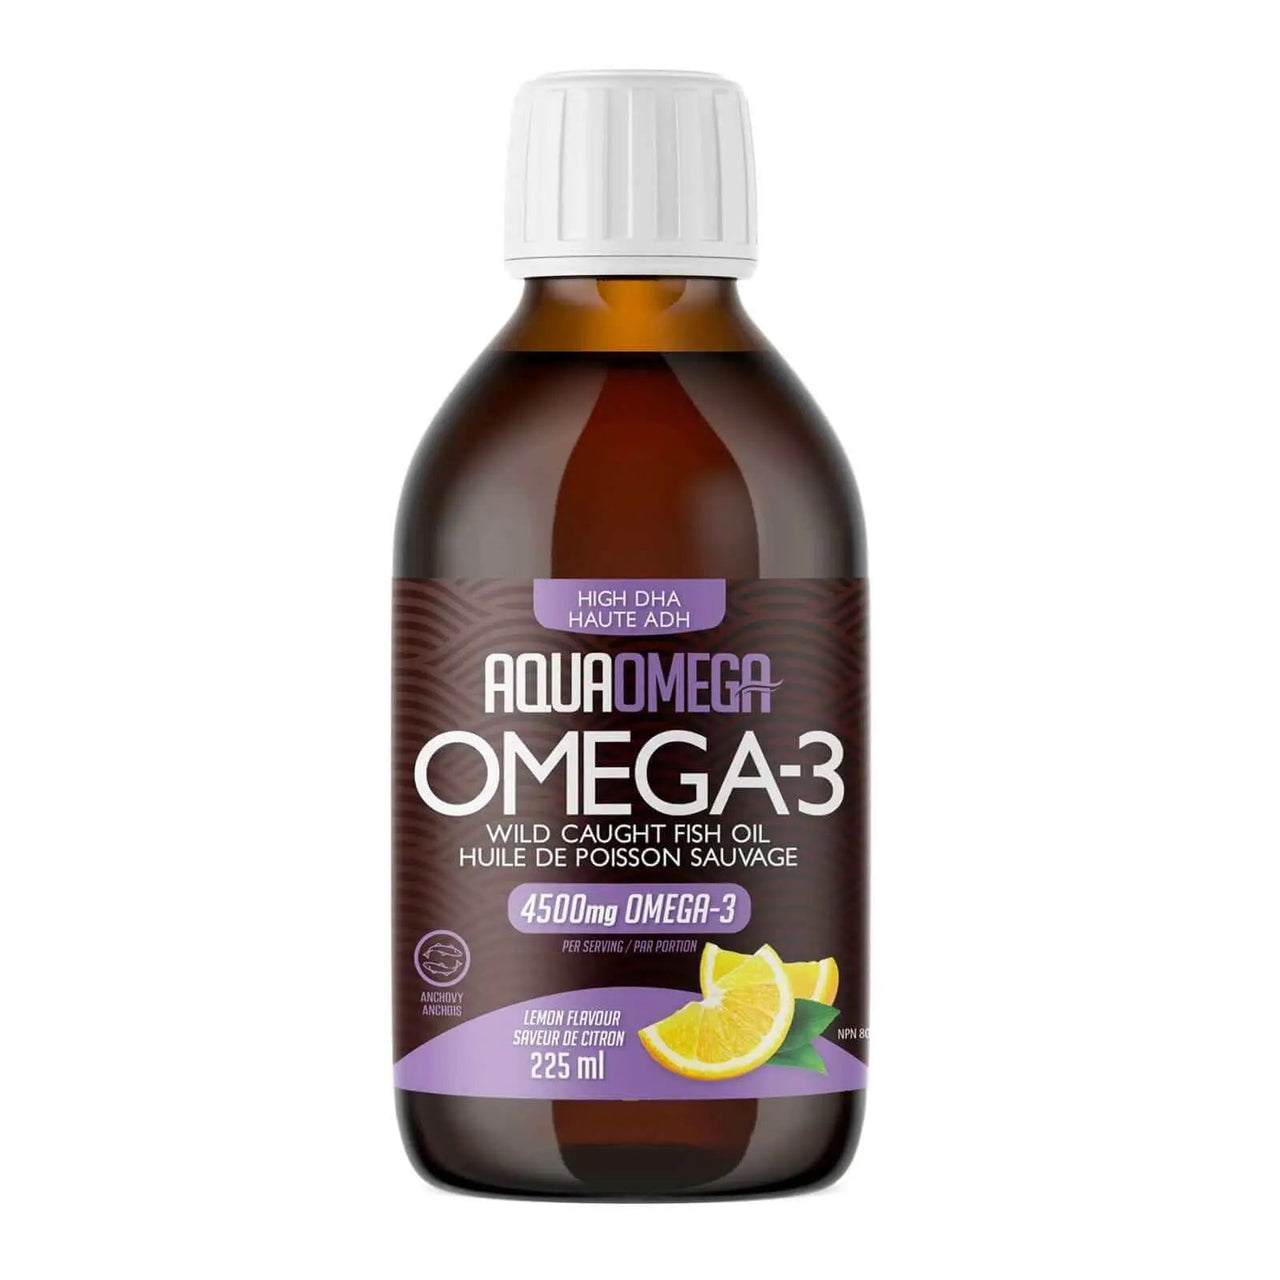 Aqua Omega High DHA Omega-3, 225 mL Lemon Flavor - Nutrition Plus